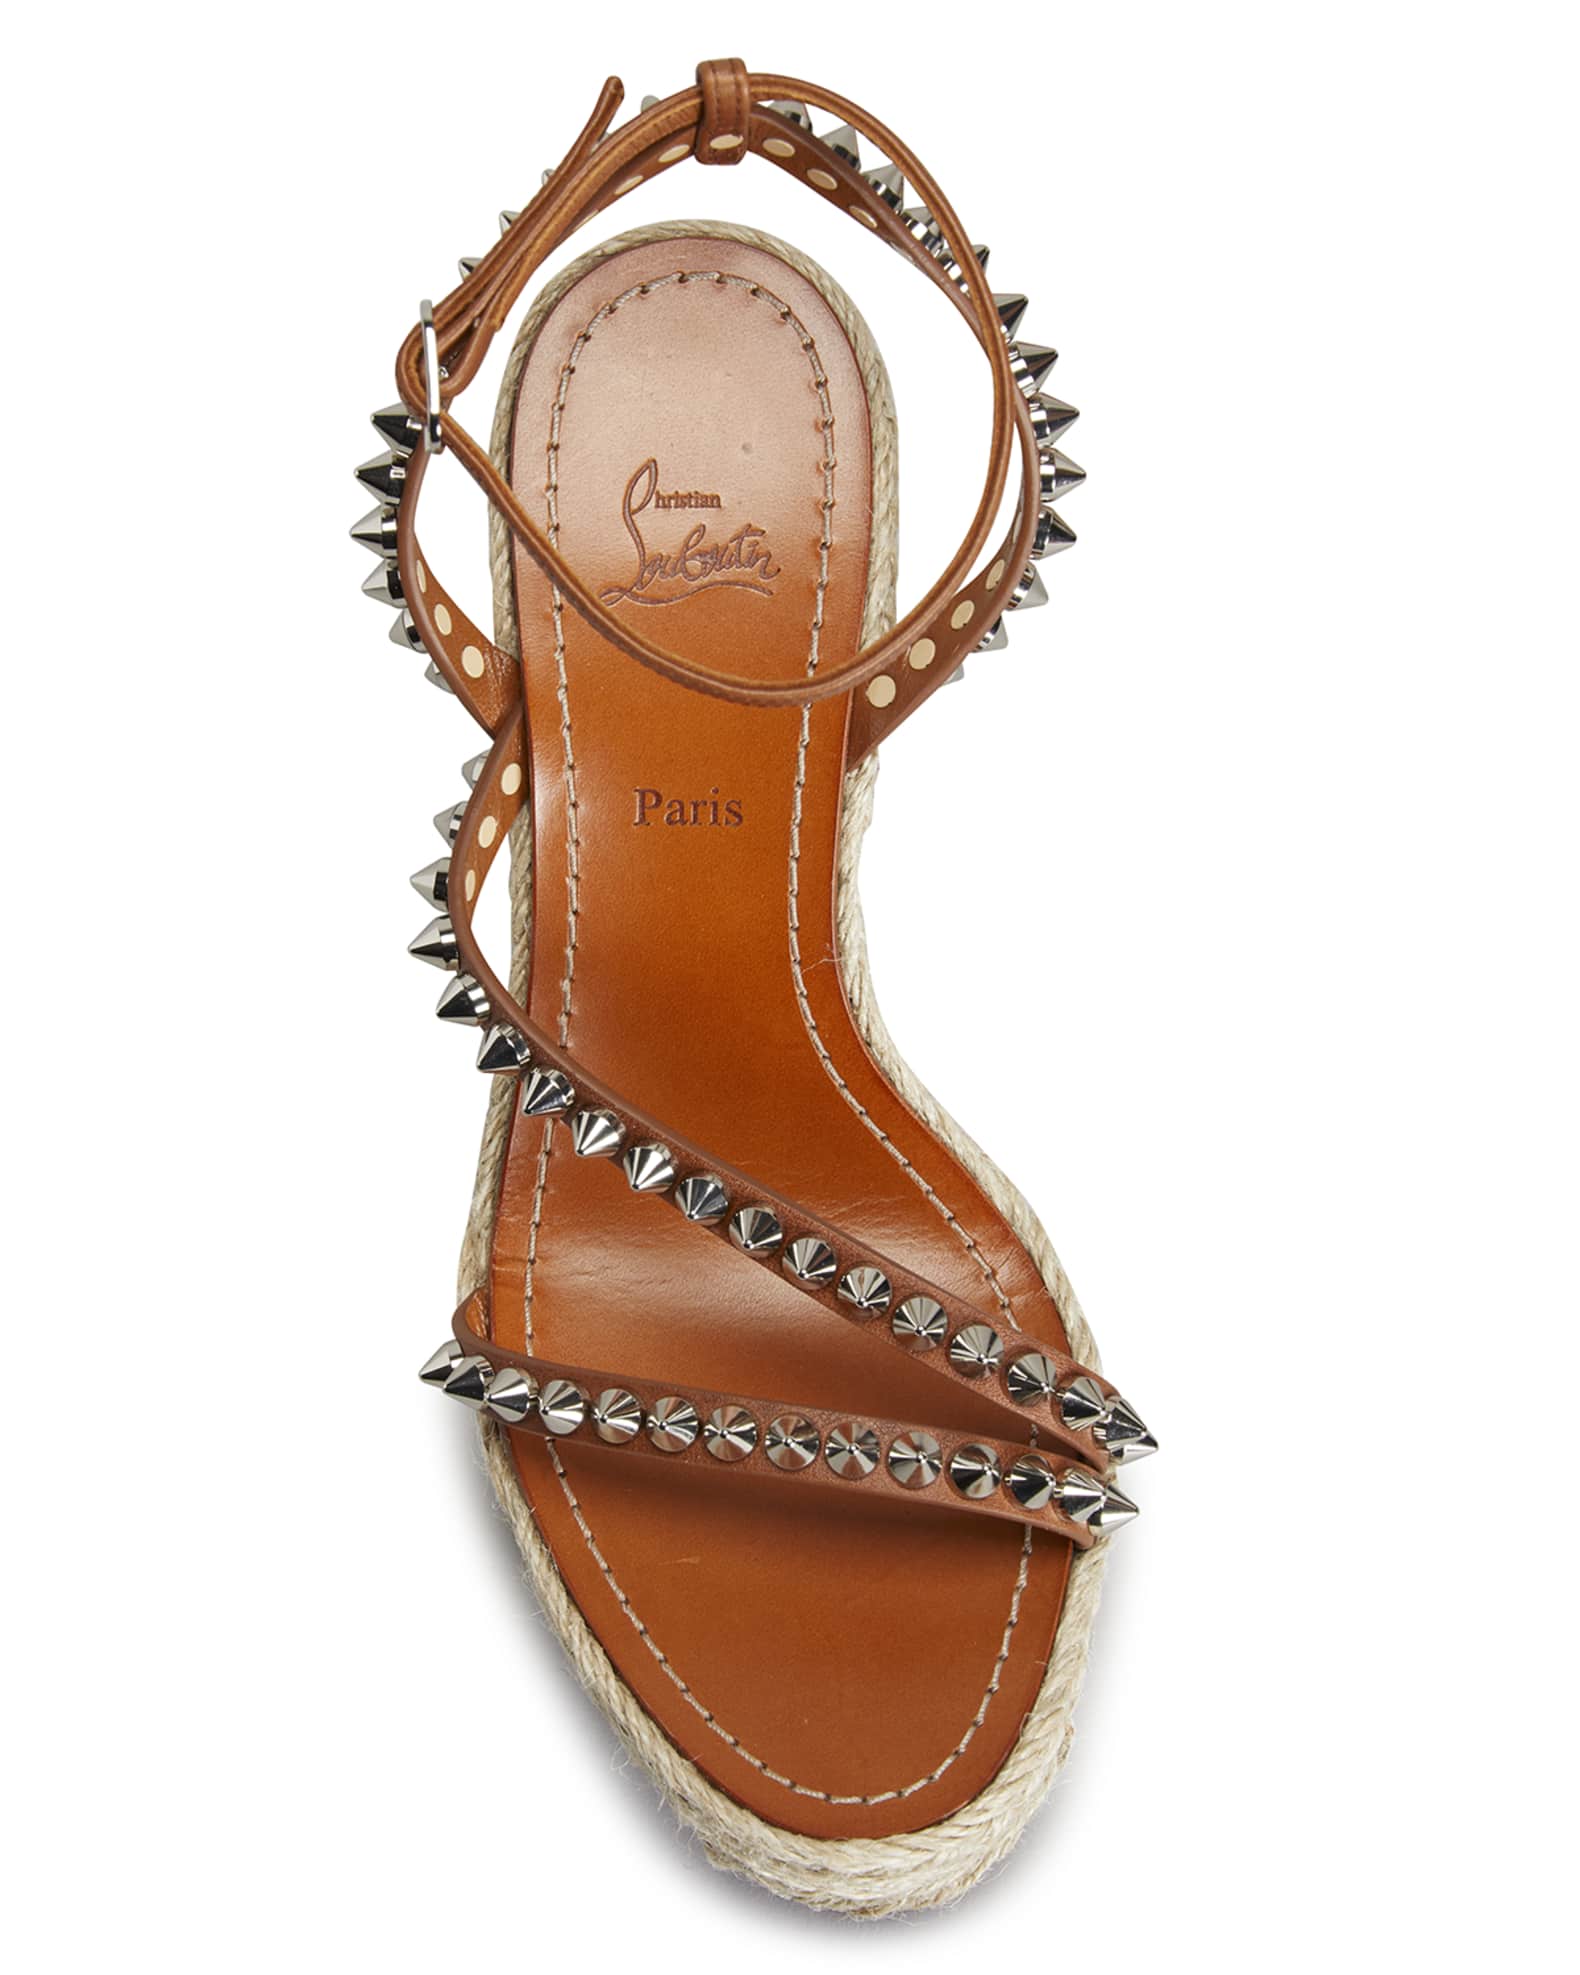 Mafaldina Spikes Leather Sandals in Orange - Christian Louboutin